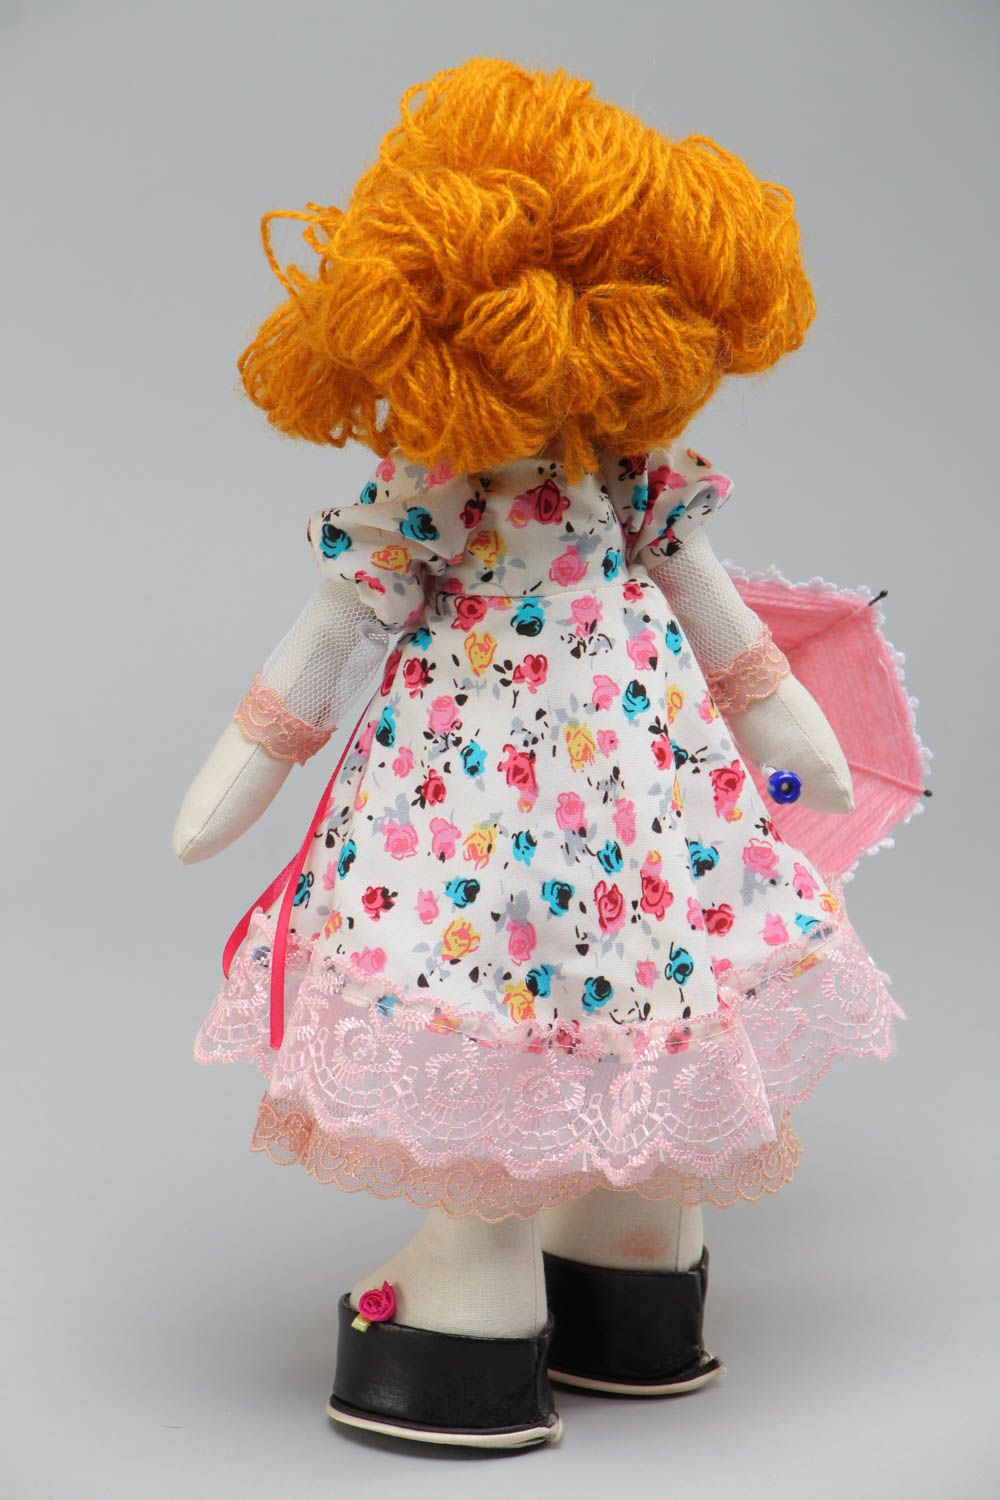 Handmade designer soft doll with umbrella interior toy made of cotton and satin photo 3